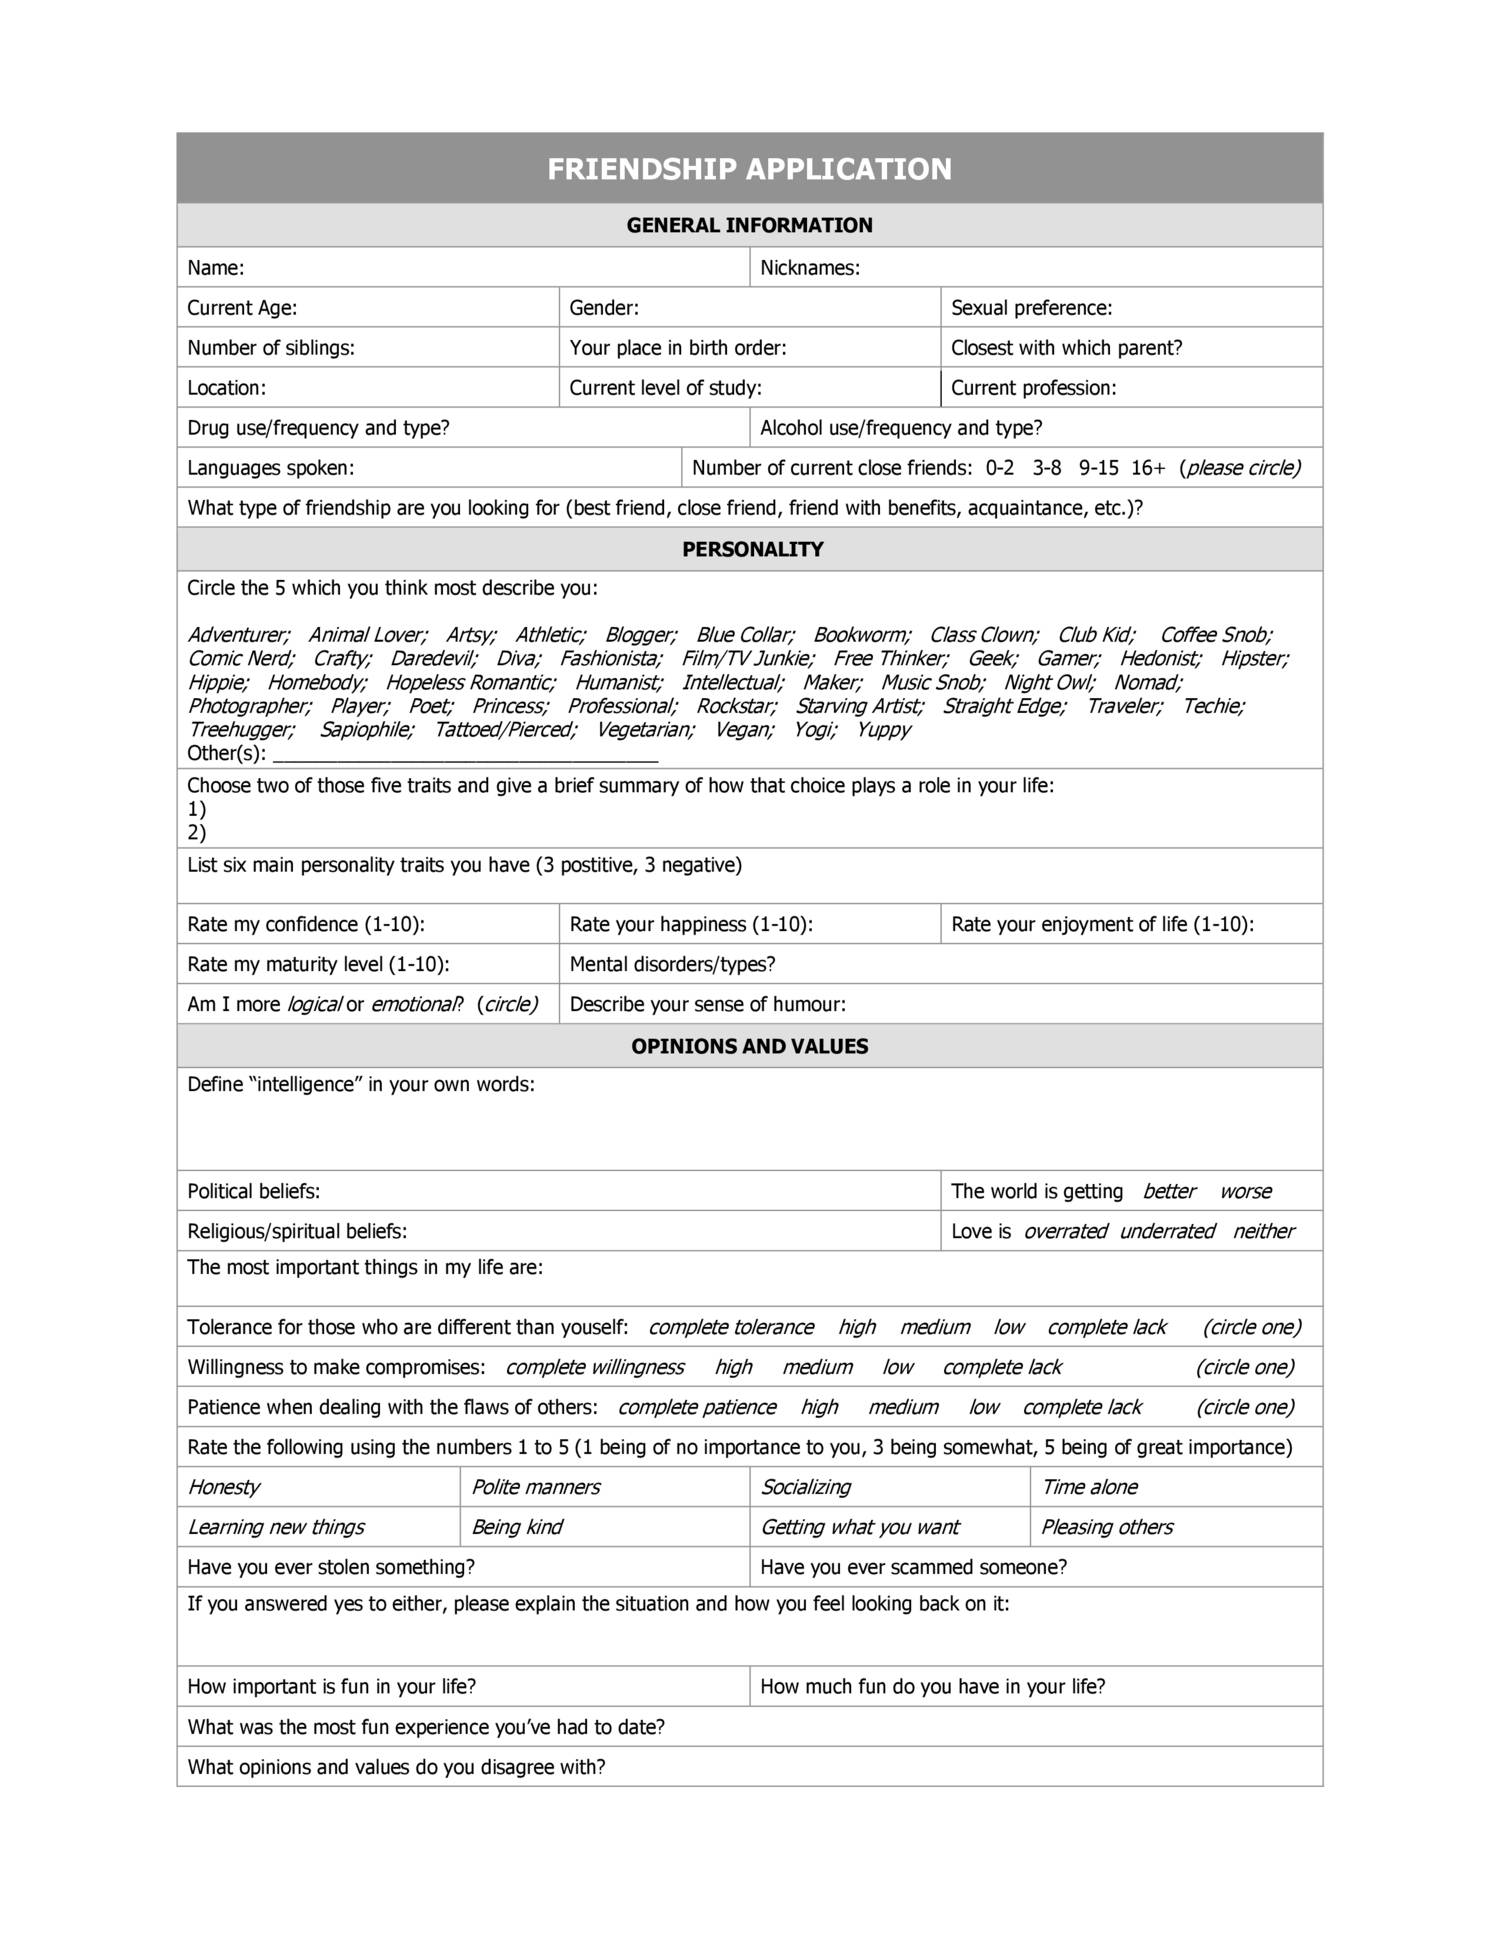 Friendship application form docx DocDroid